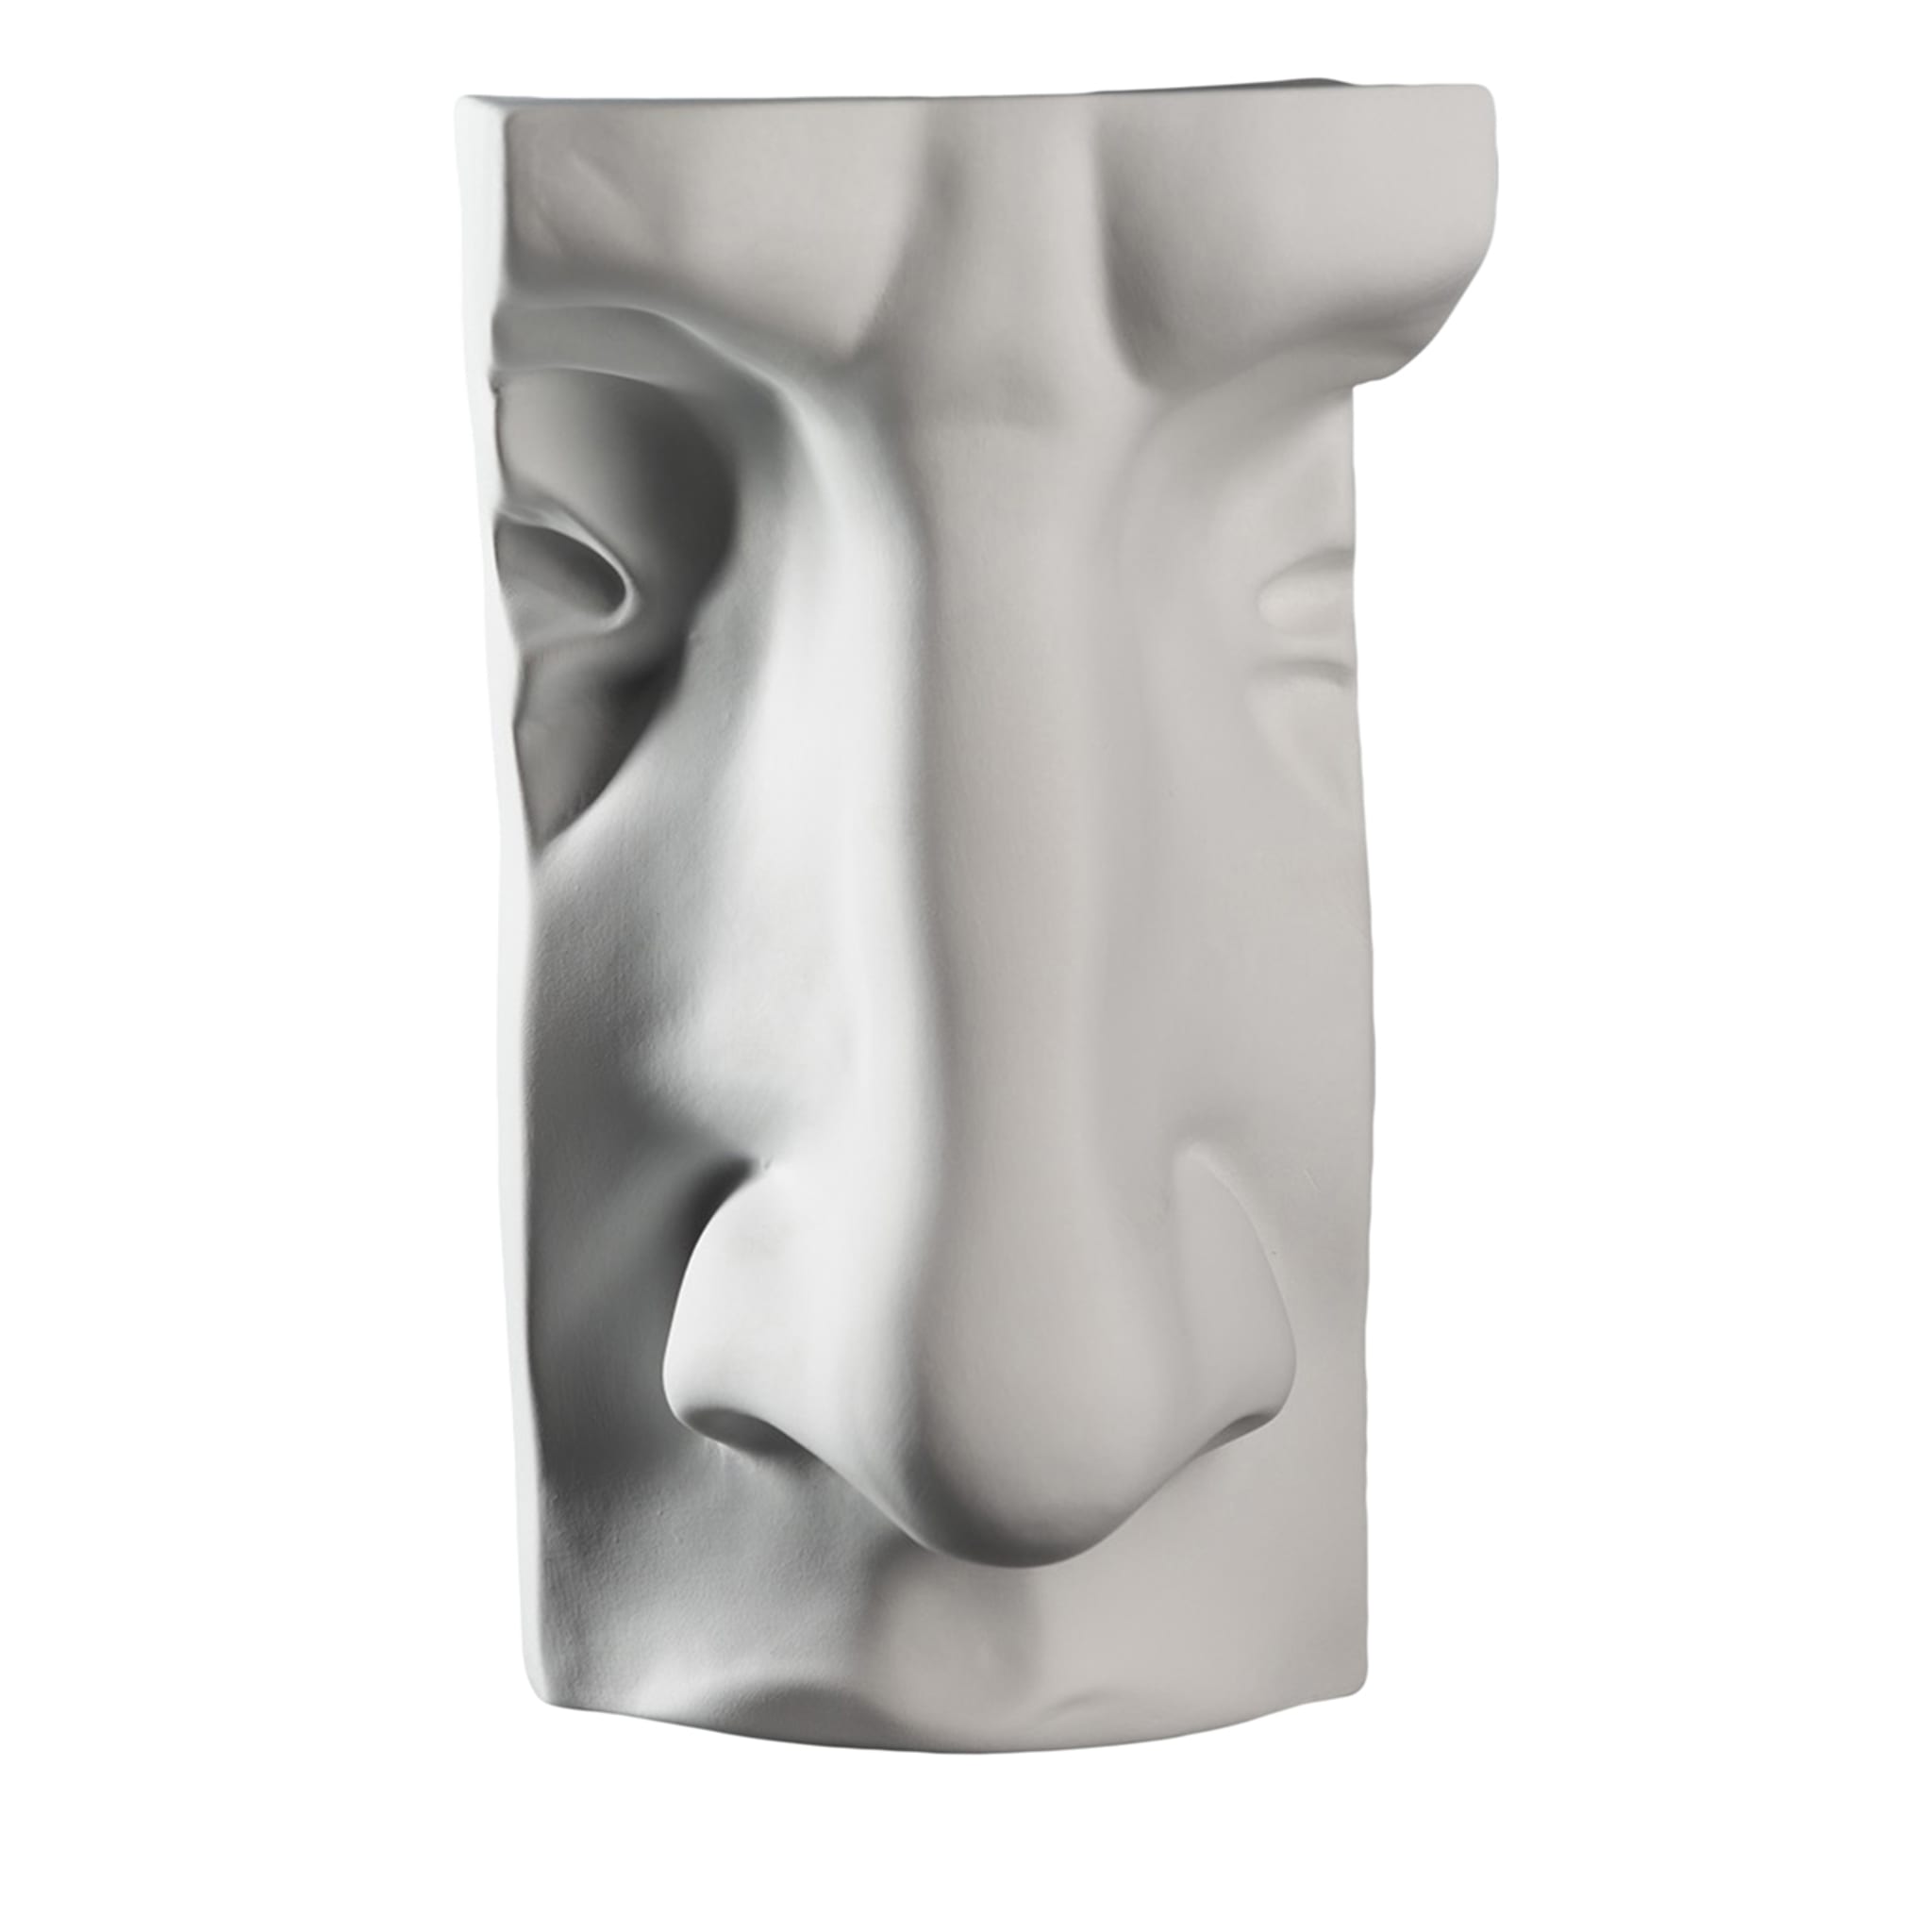 David's Nose White Sculpture - Main view